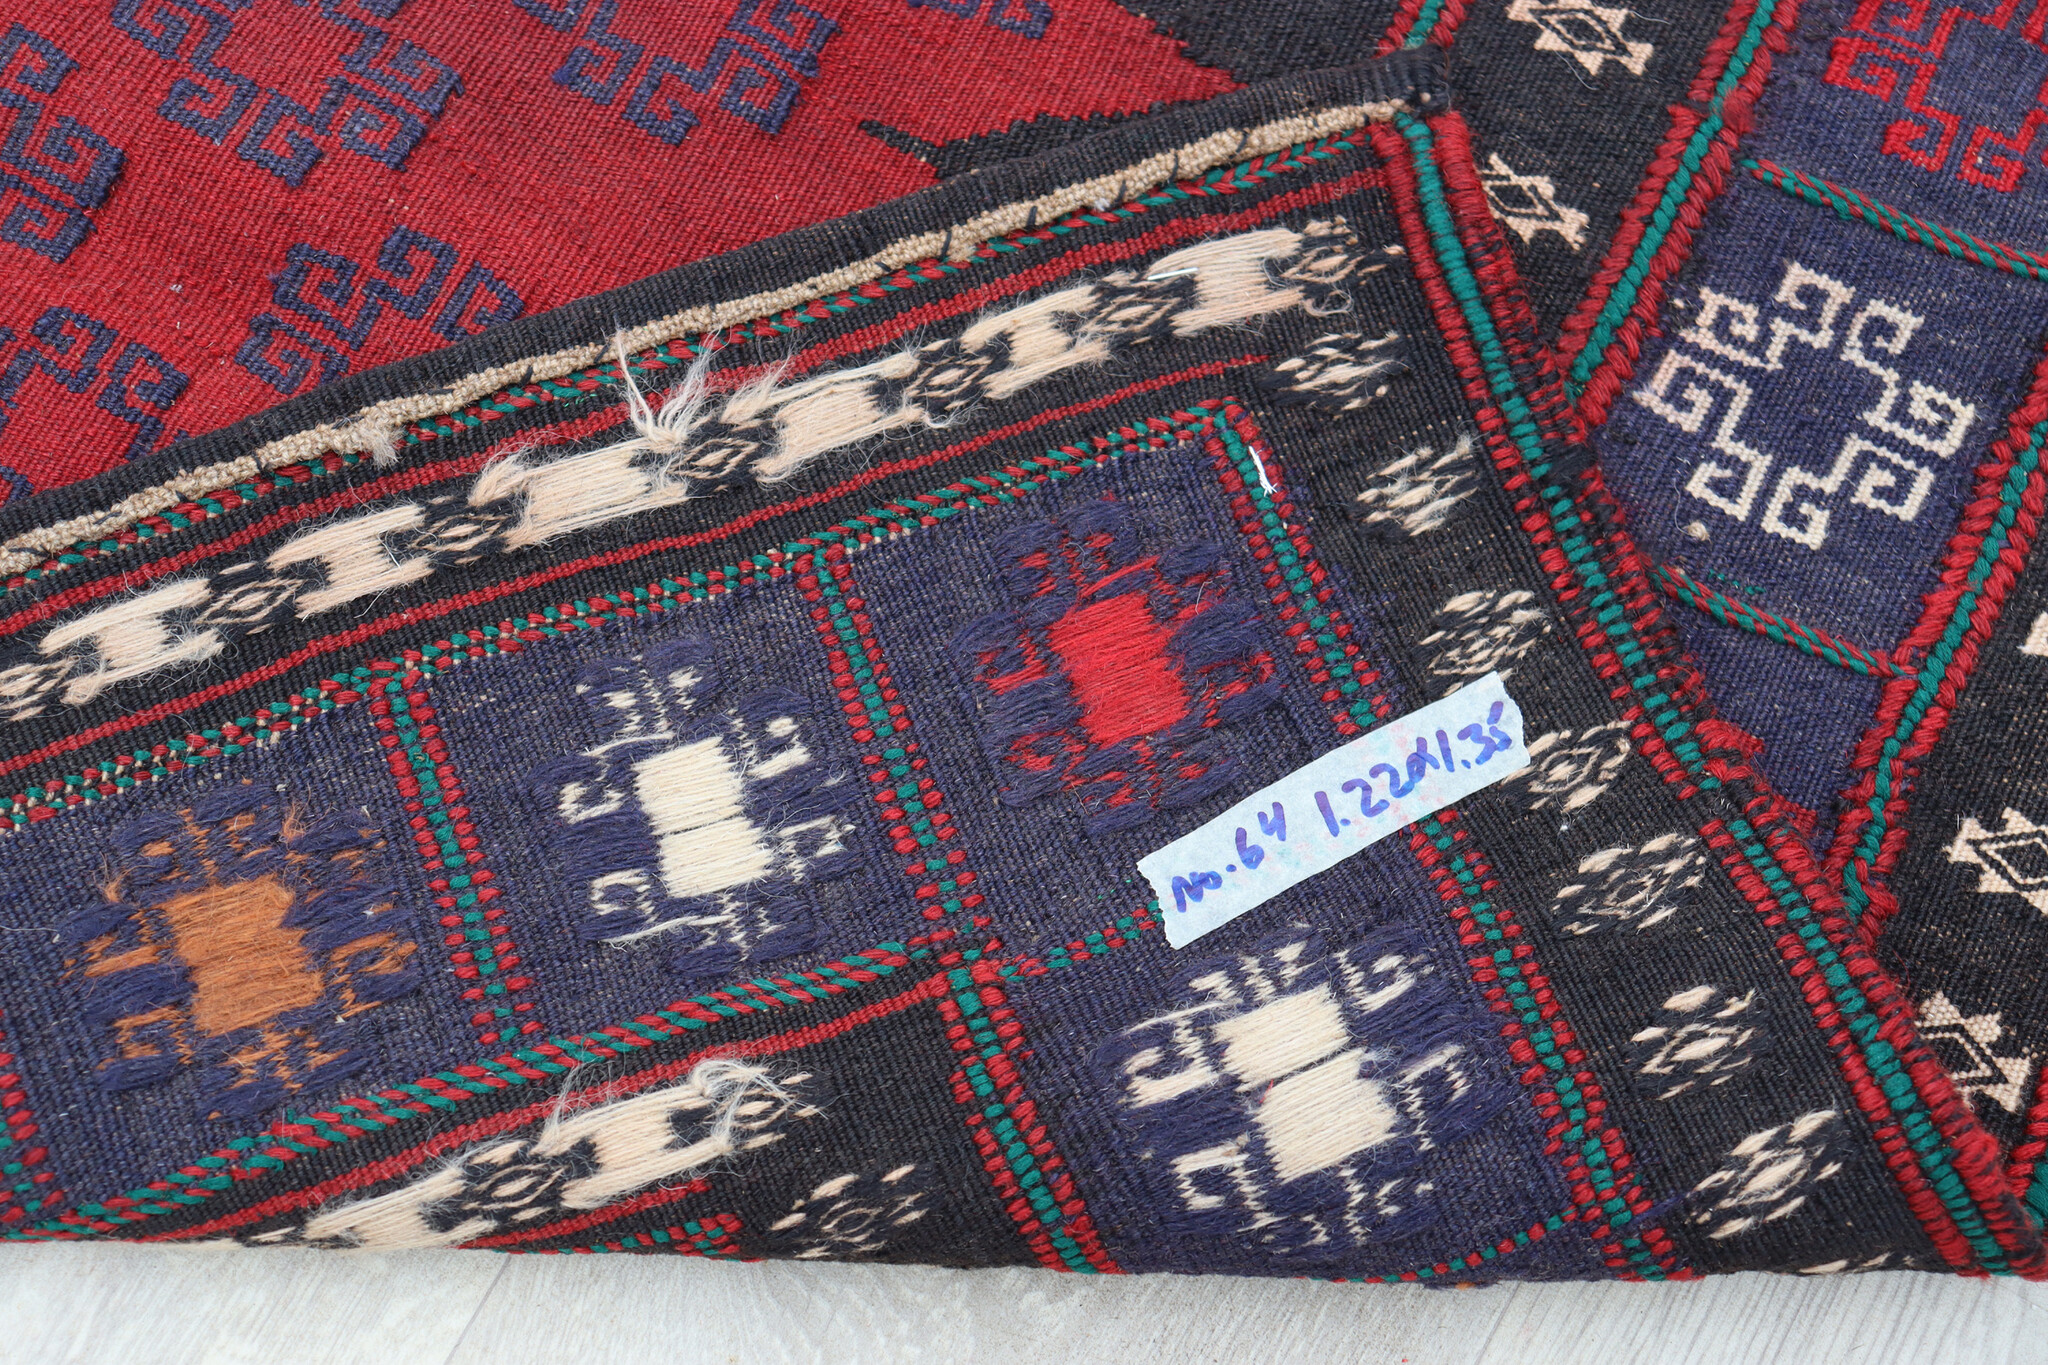 135x122  cm  oriental Handmade nomadic  kilim from Afghanistan sofrah No: 64